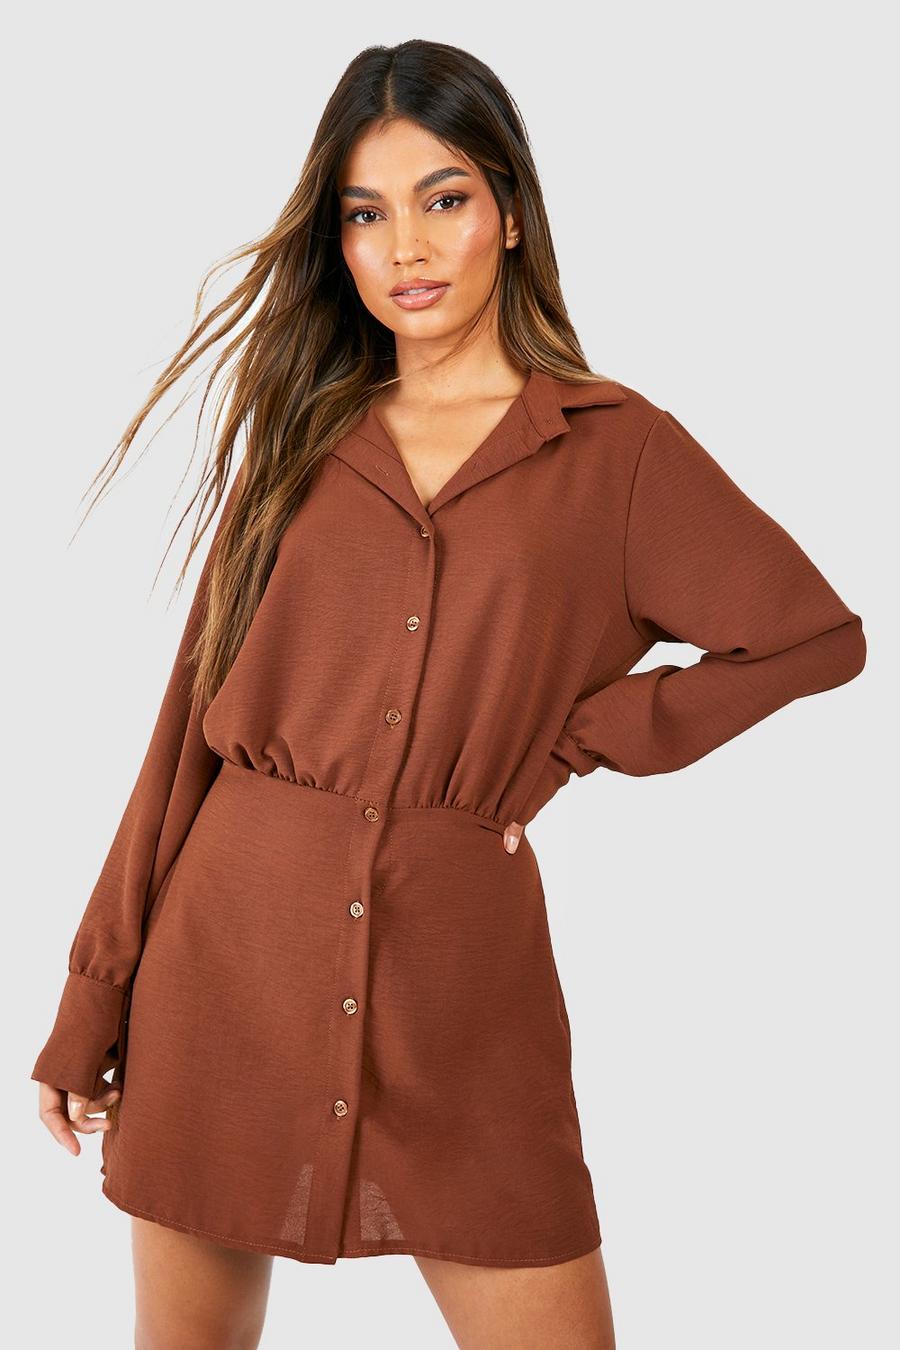 Chocolate brown Hammered Blouson Button Front Shirt Dress